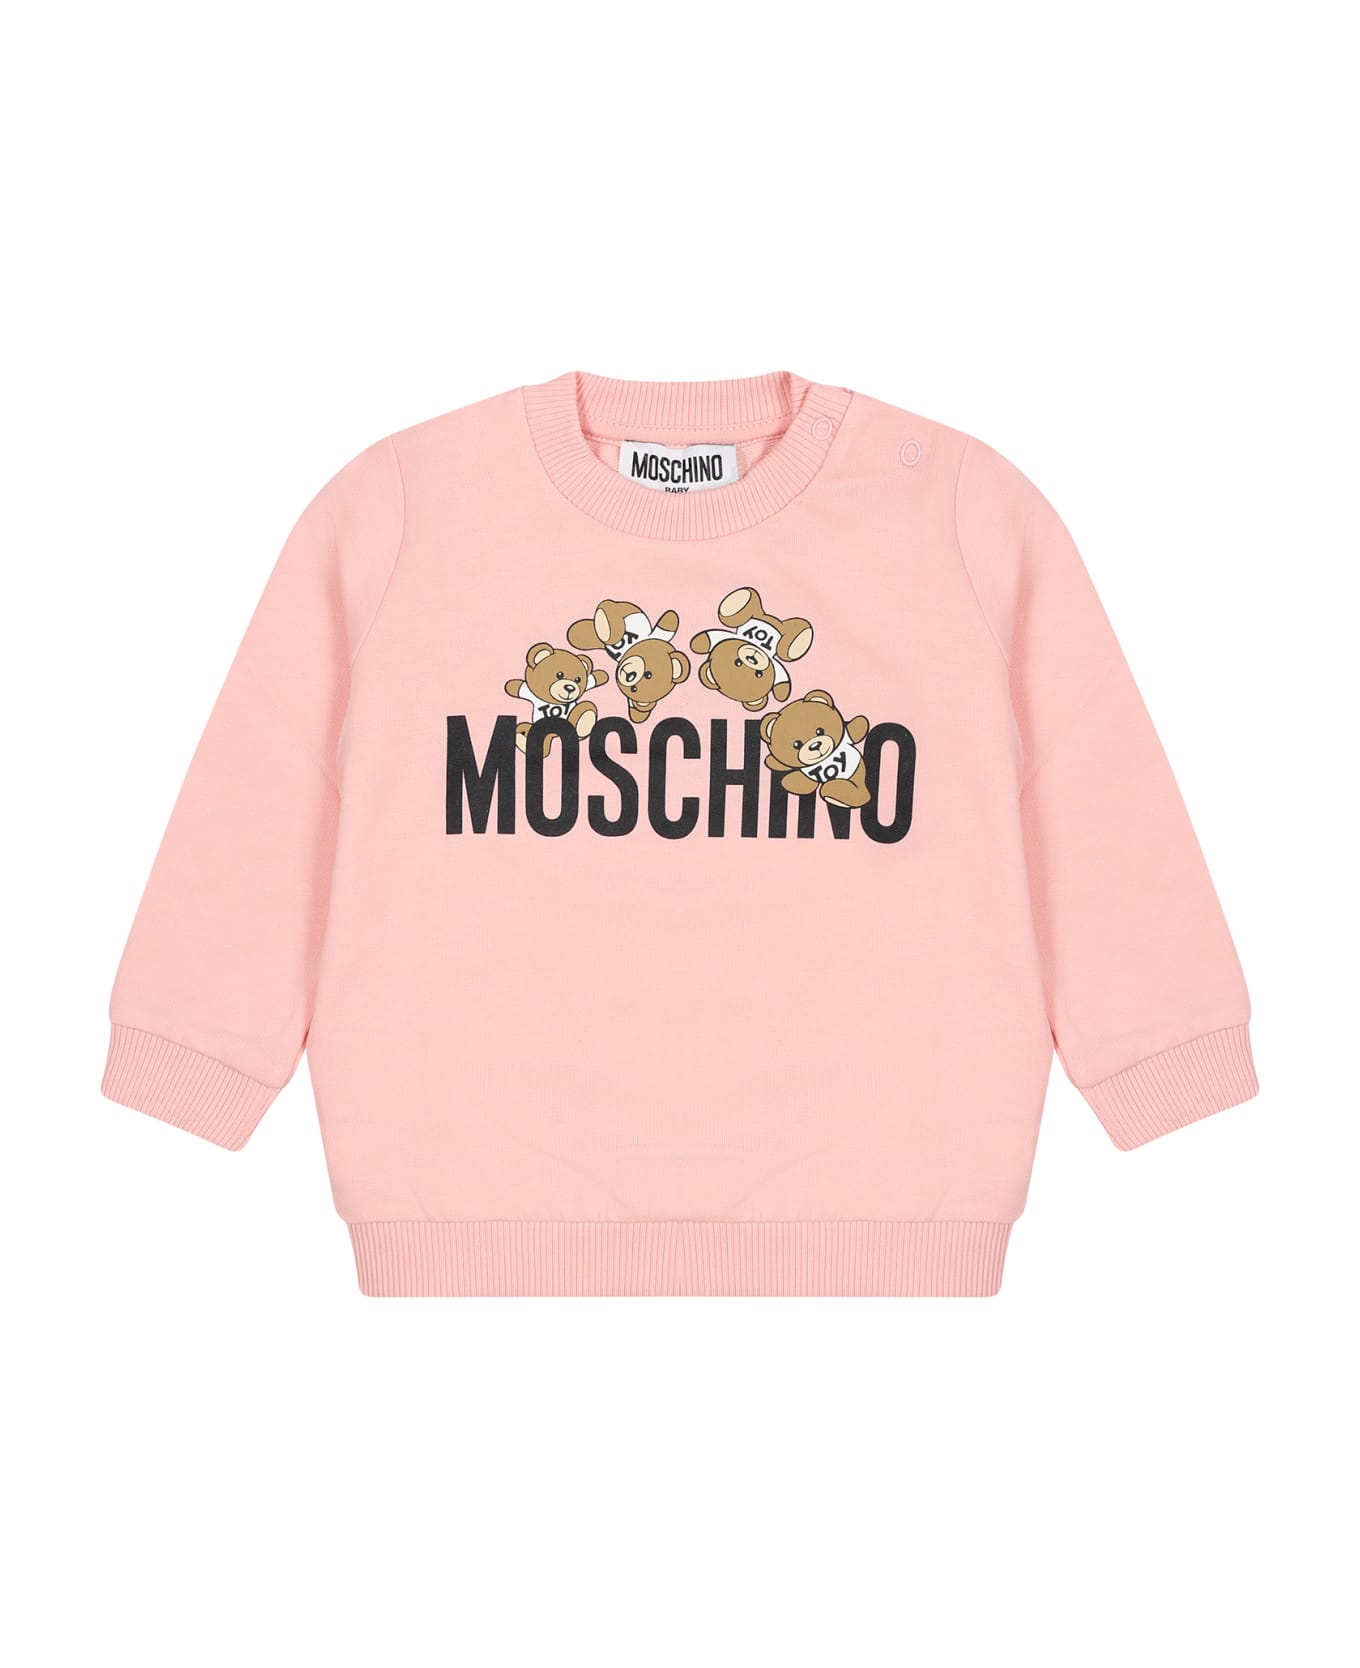 Moschino Pink Sweatshirt For Babies With Teddy Bears And Logo - Pink ニットウェア＆スウェットシャツ